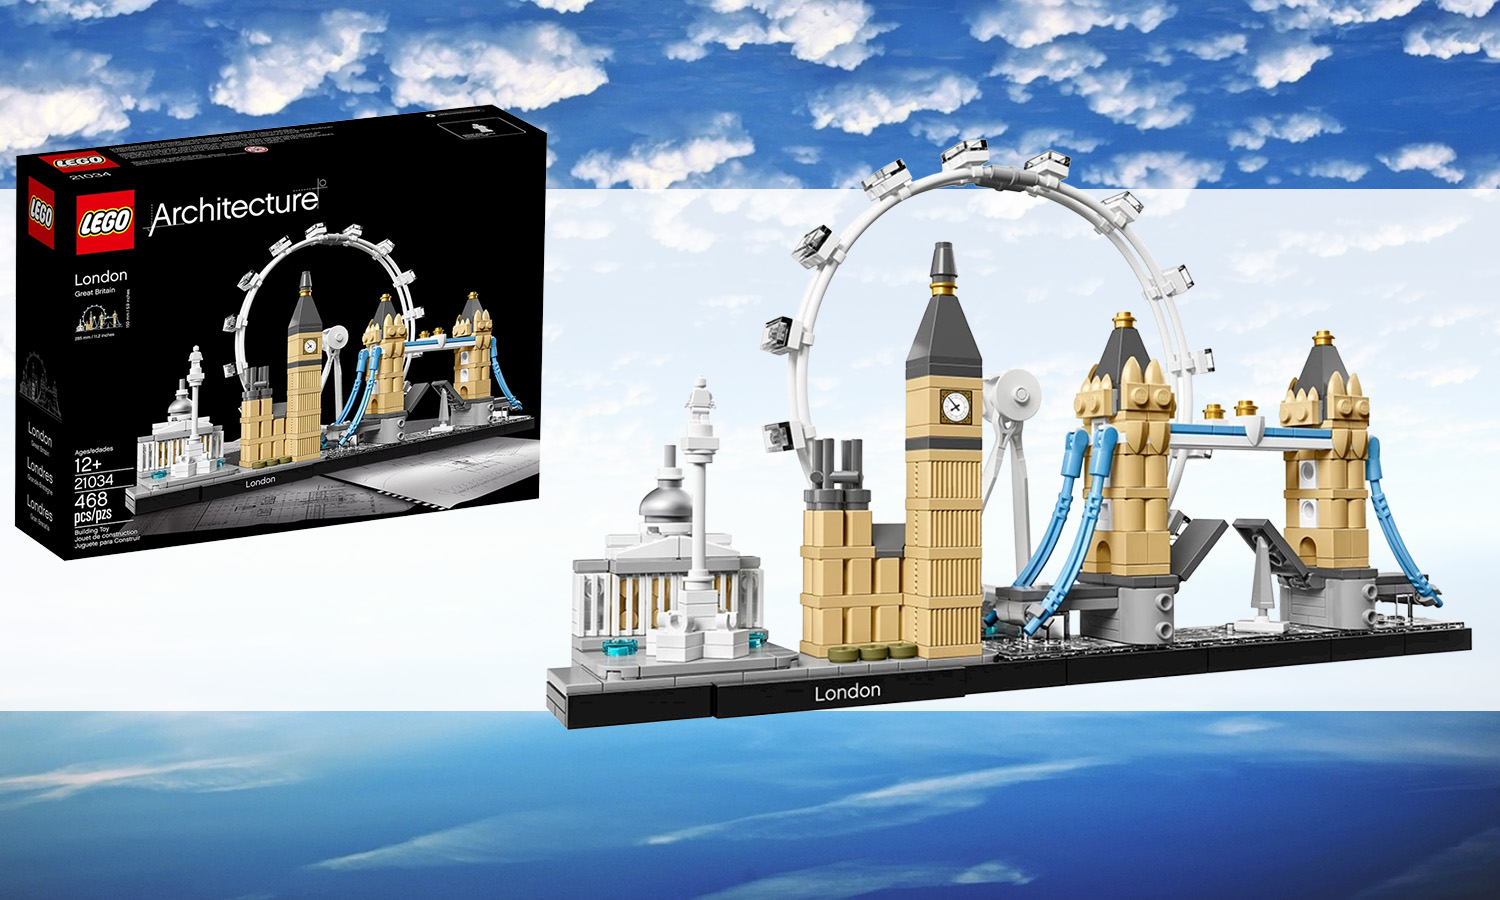 https://chocobonplan.com/wp-content/uploads/2022/10/Lego-Londres-visuel-slider.jpg